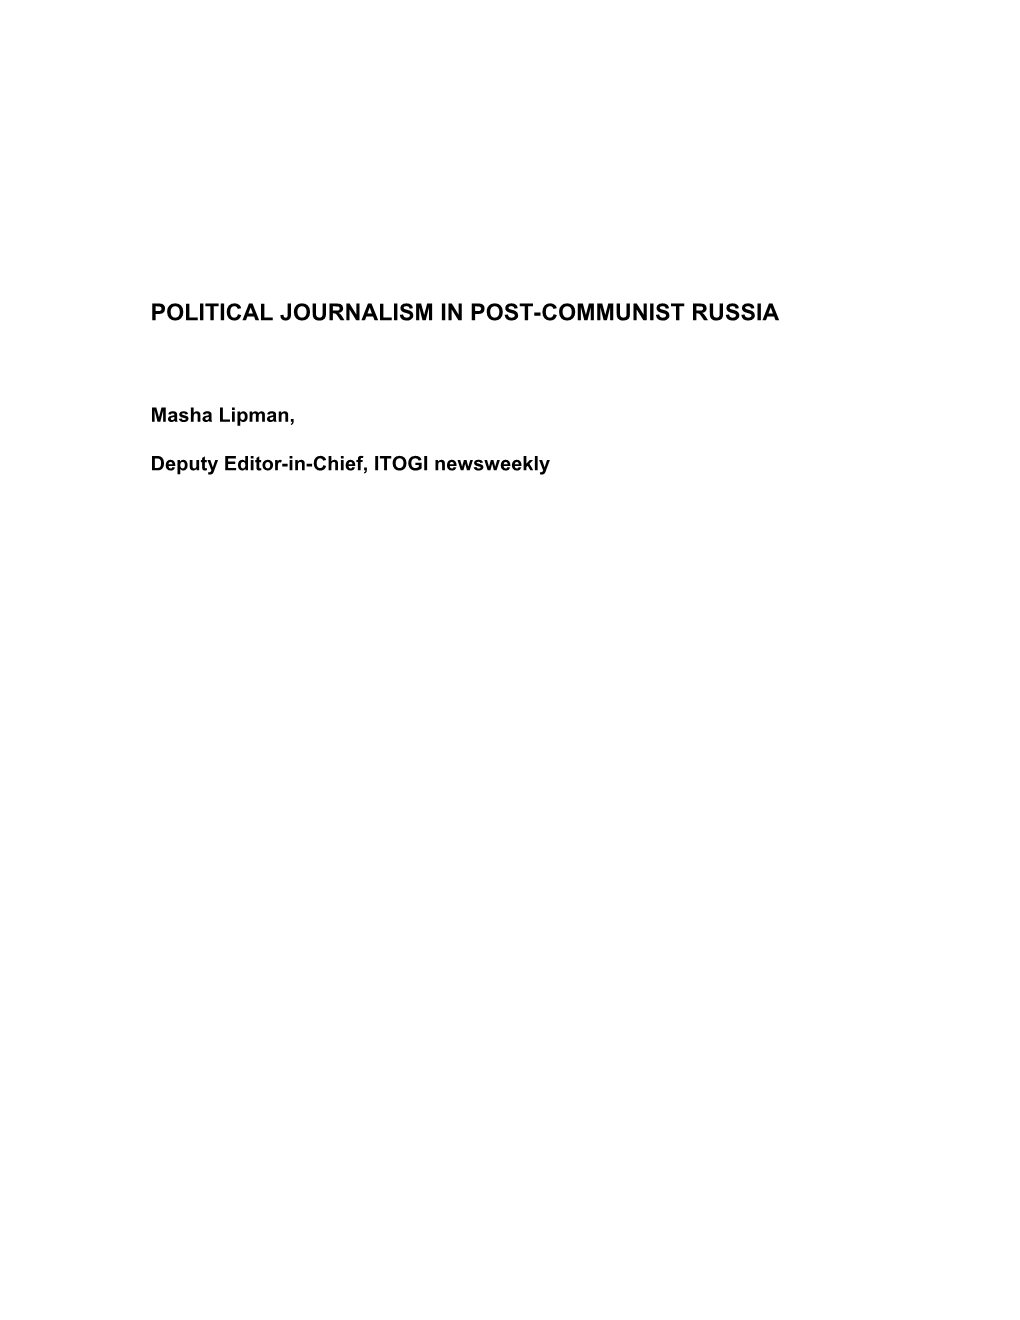 Political Journalism in Post-Communist Russia